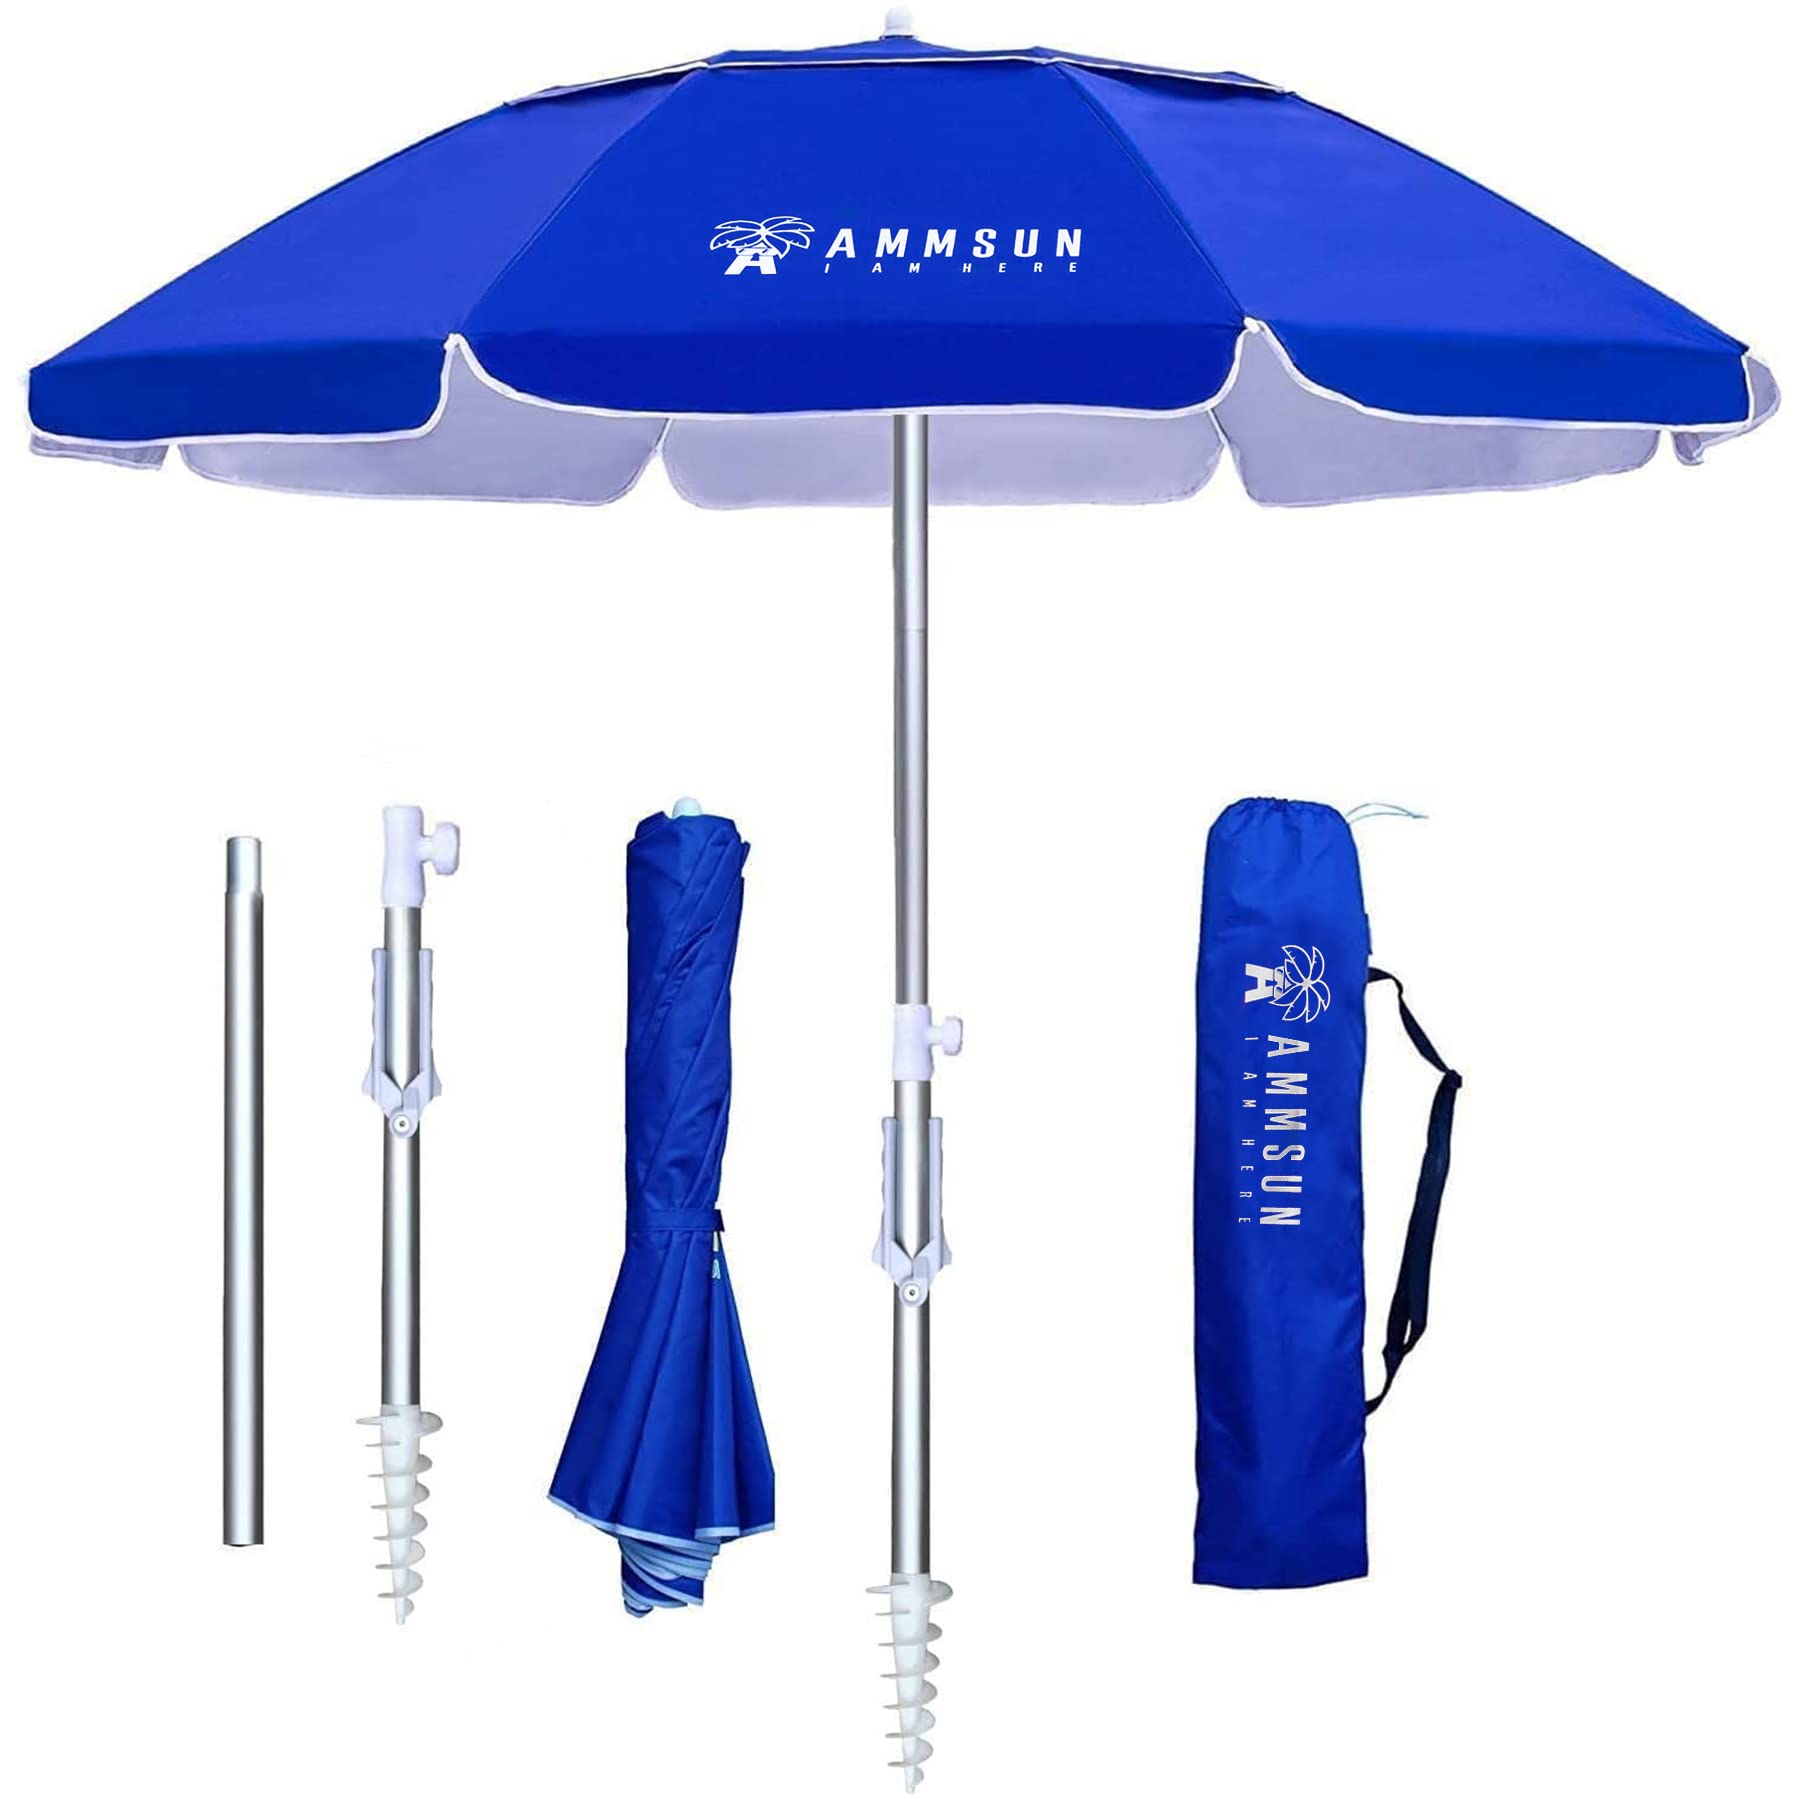 AMMSUN 6.5ft Portable Beach Umbrella